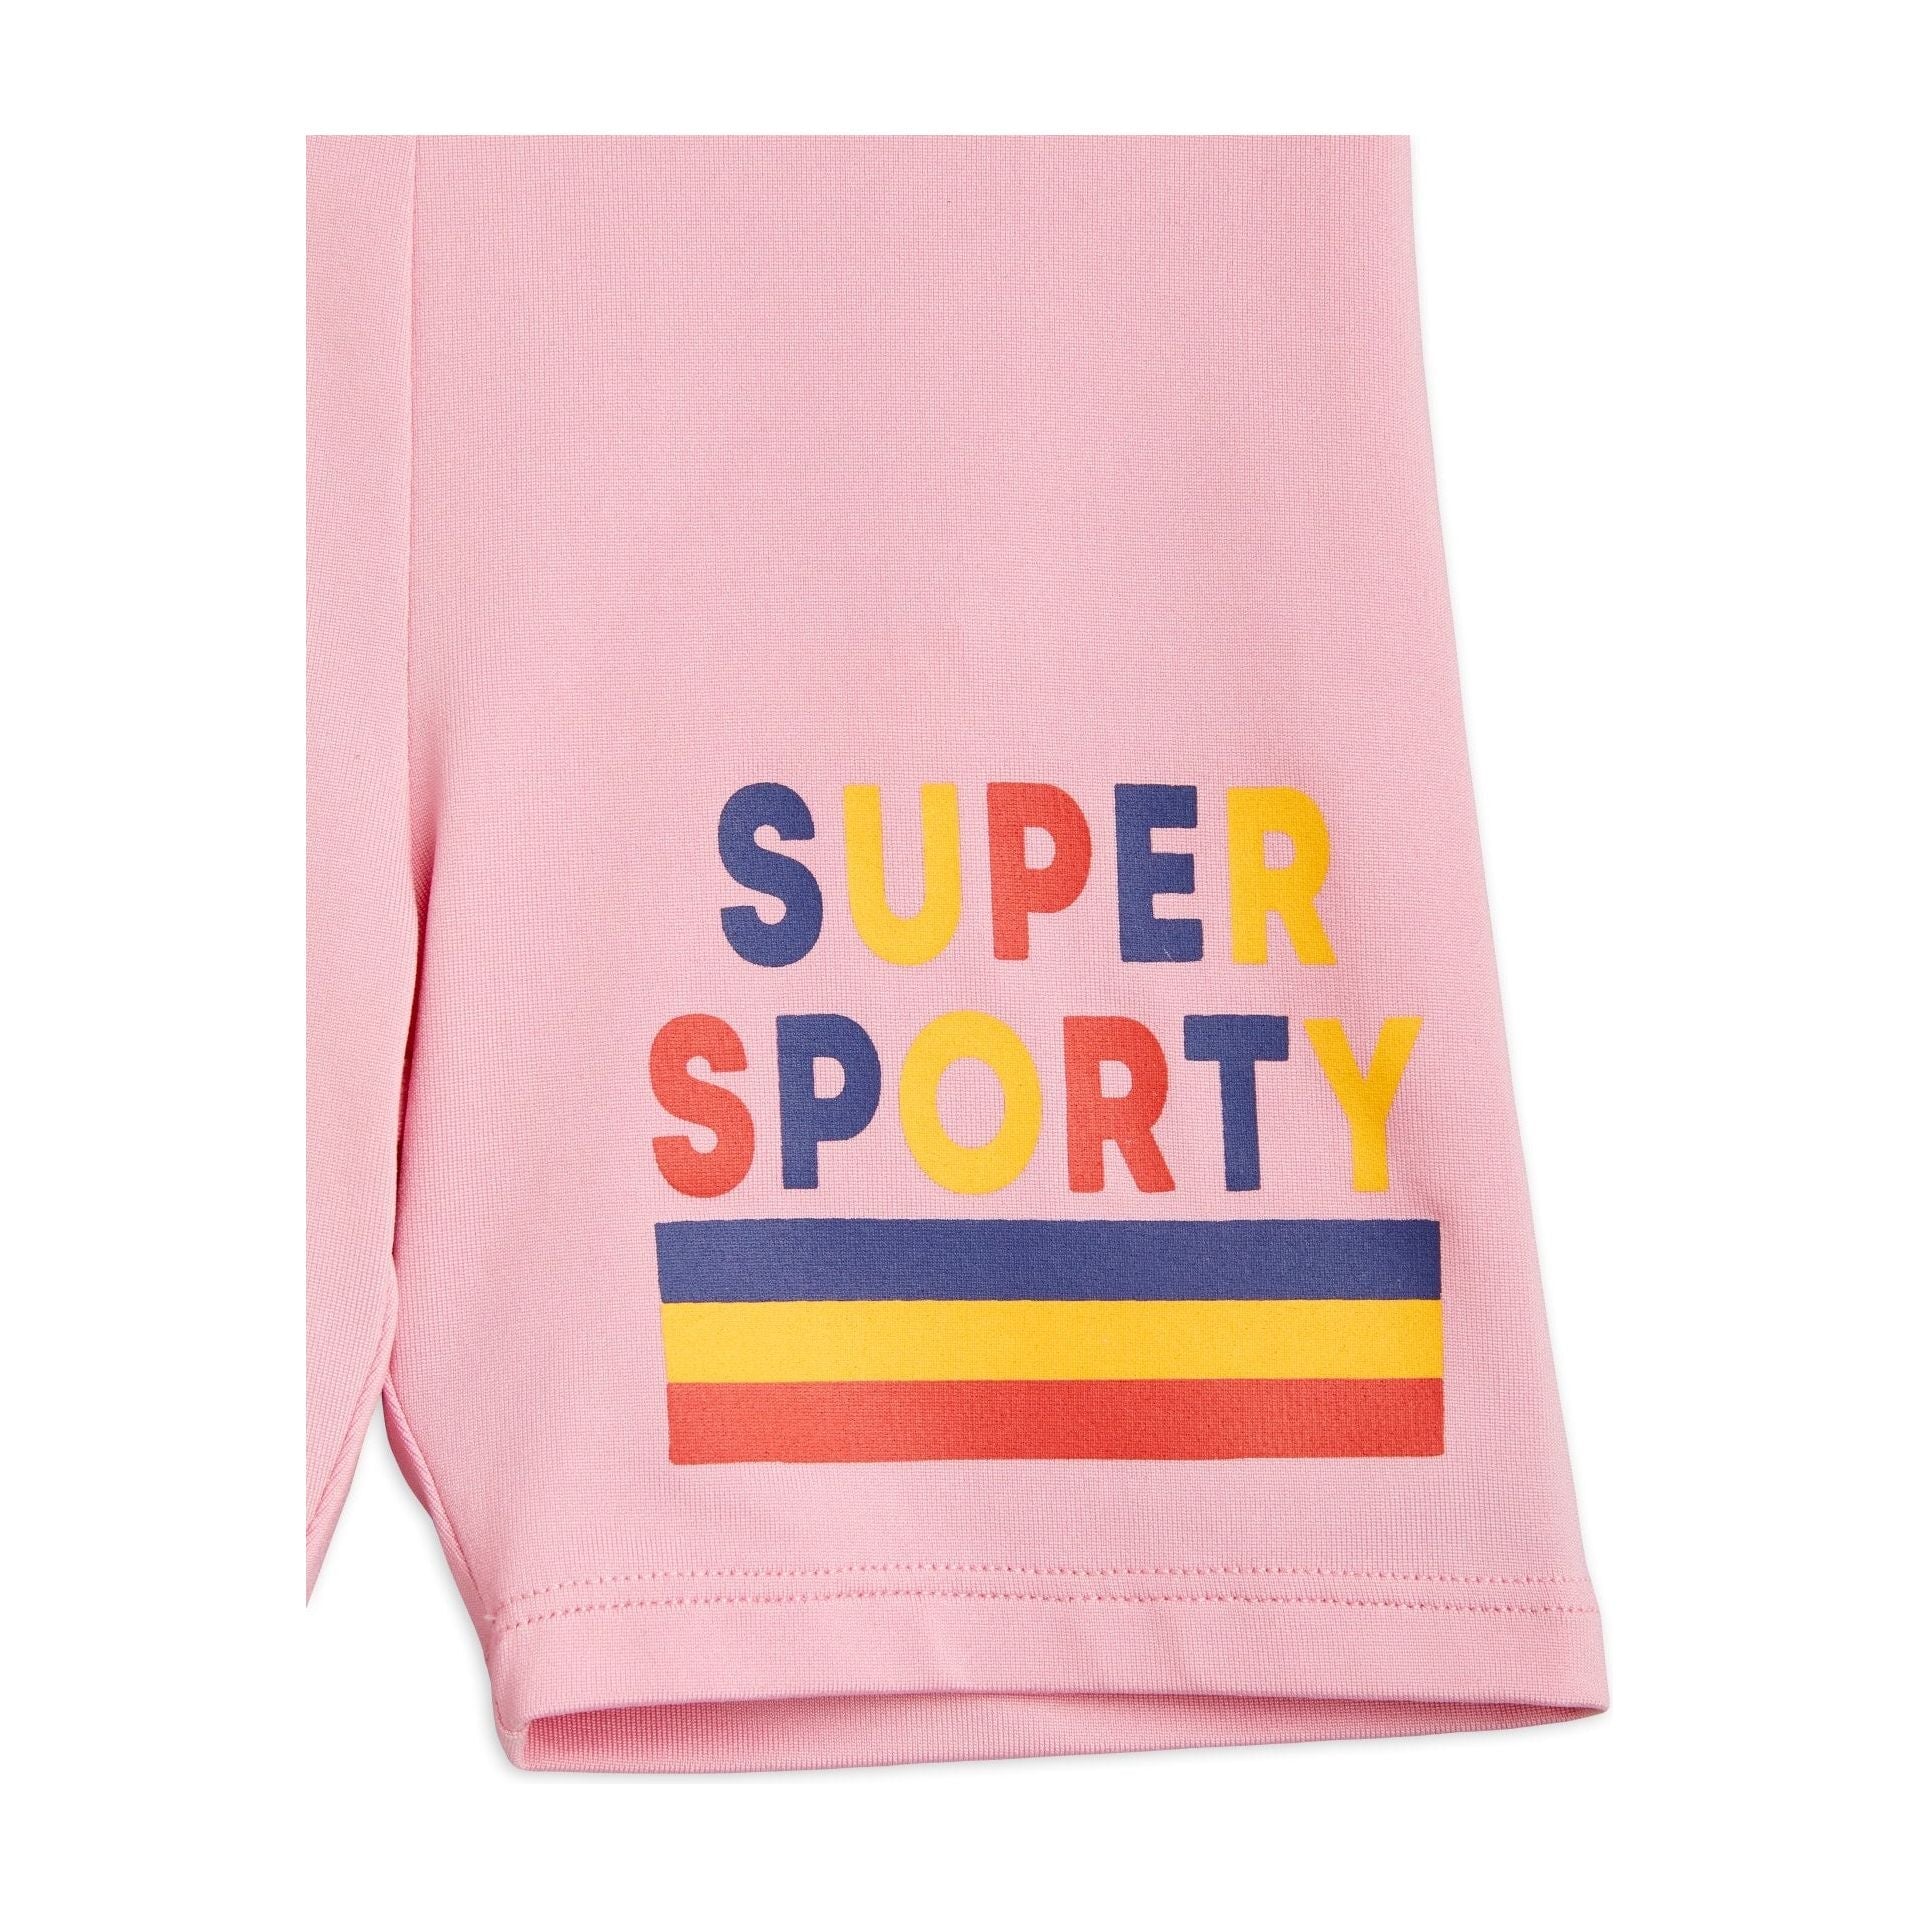 Super Sporty Sp Bike Shorts